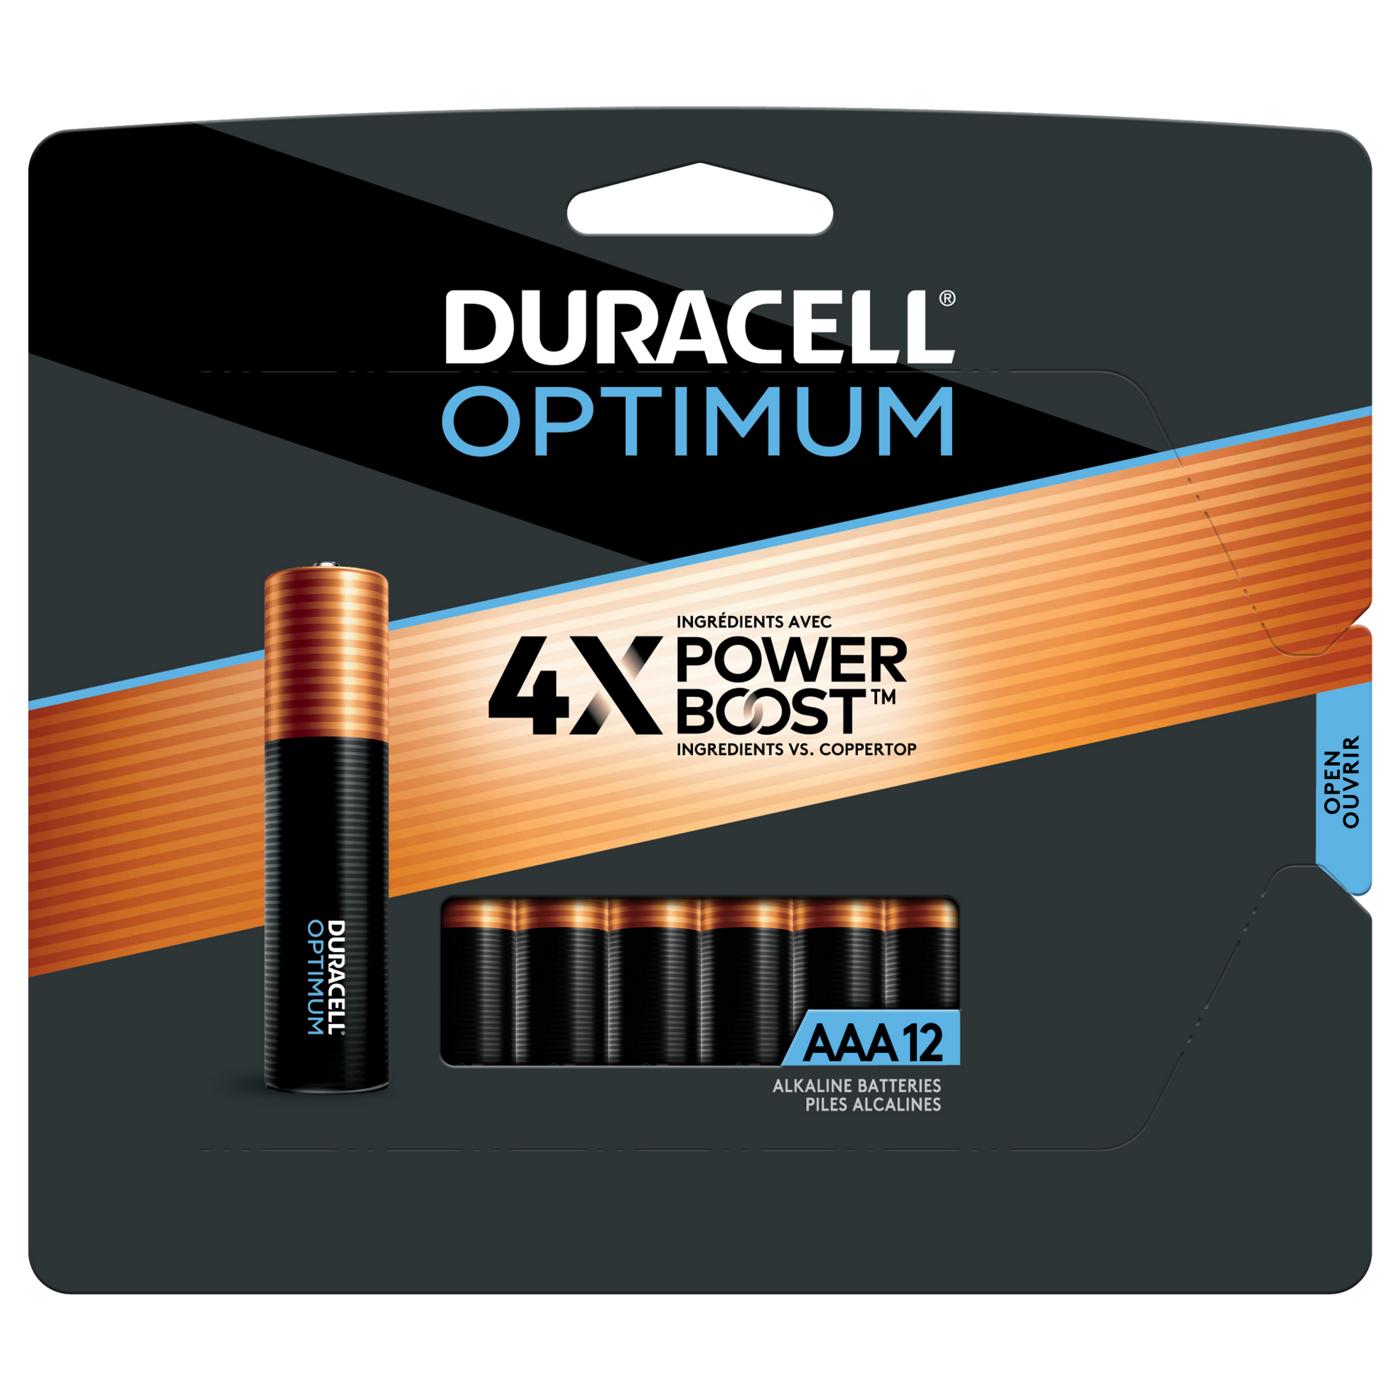 Duracell Optimum Alkaline Batteries, 1.5V AAA; image 1 of 3